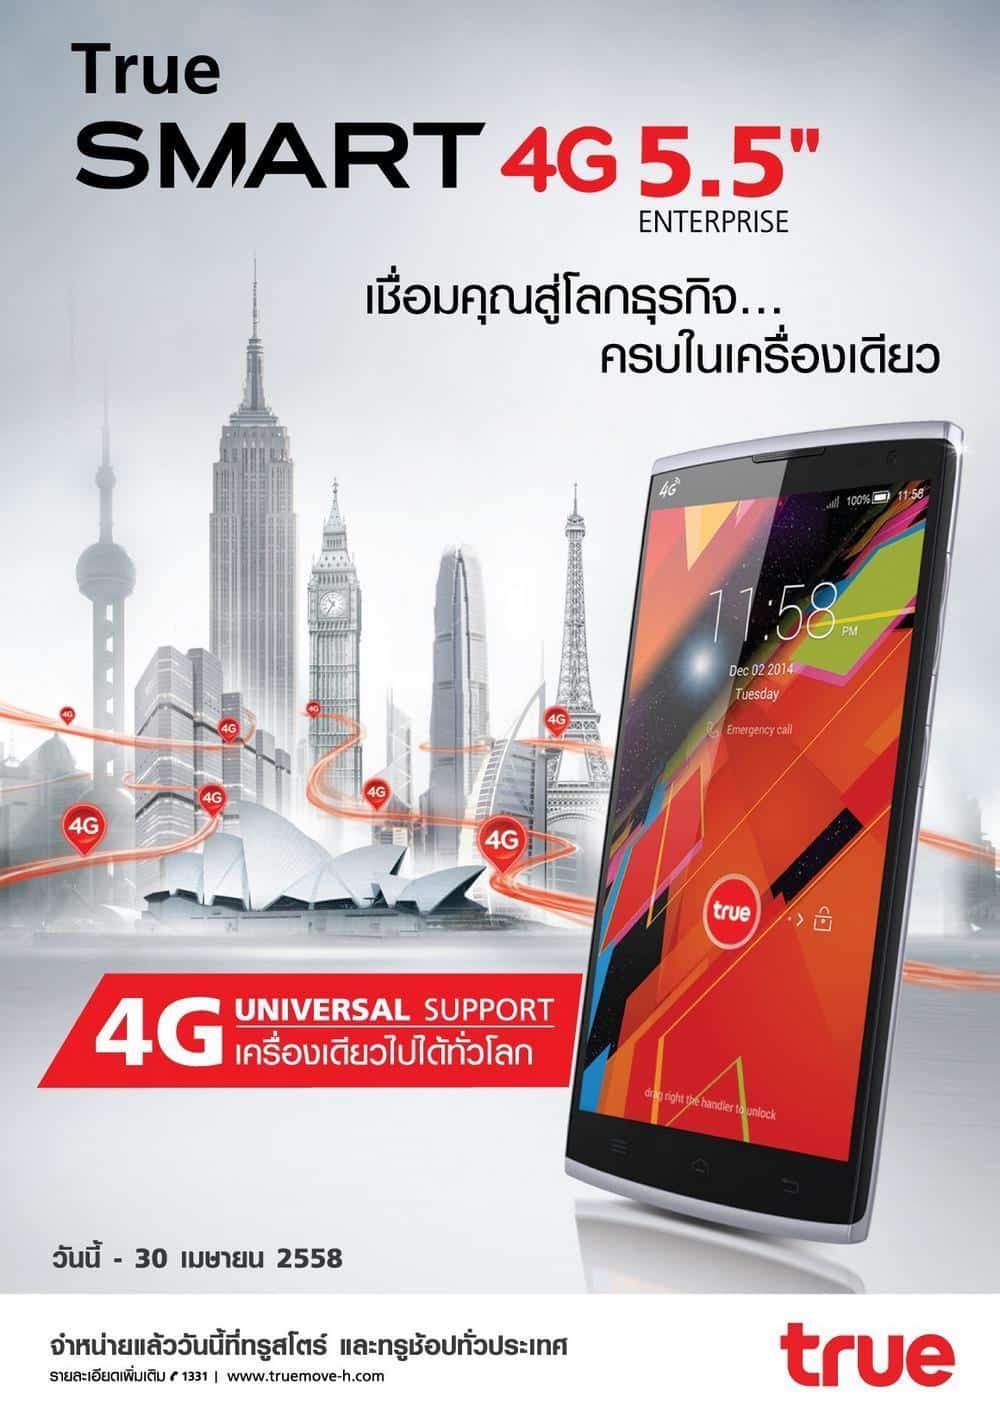 New product_True Smart 4G 5.5 Enterprise_03